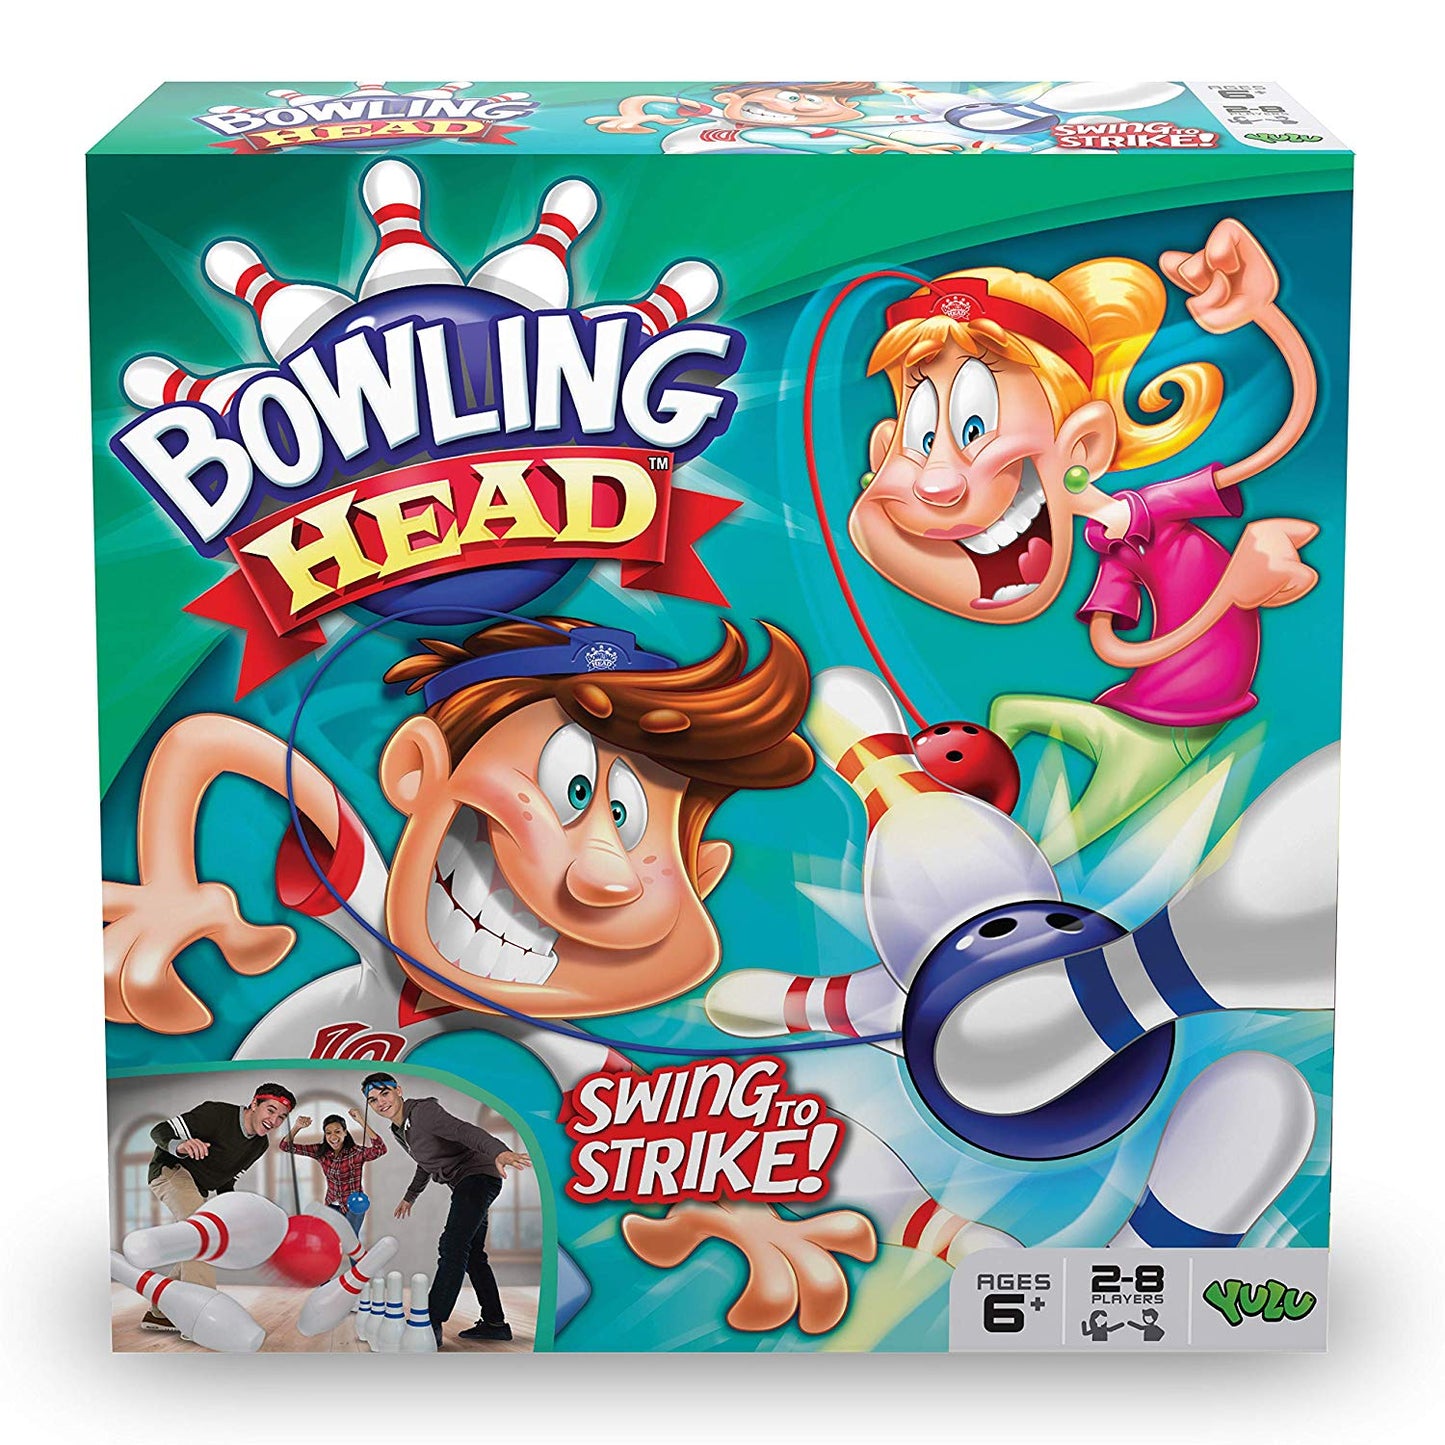 Bowling Head